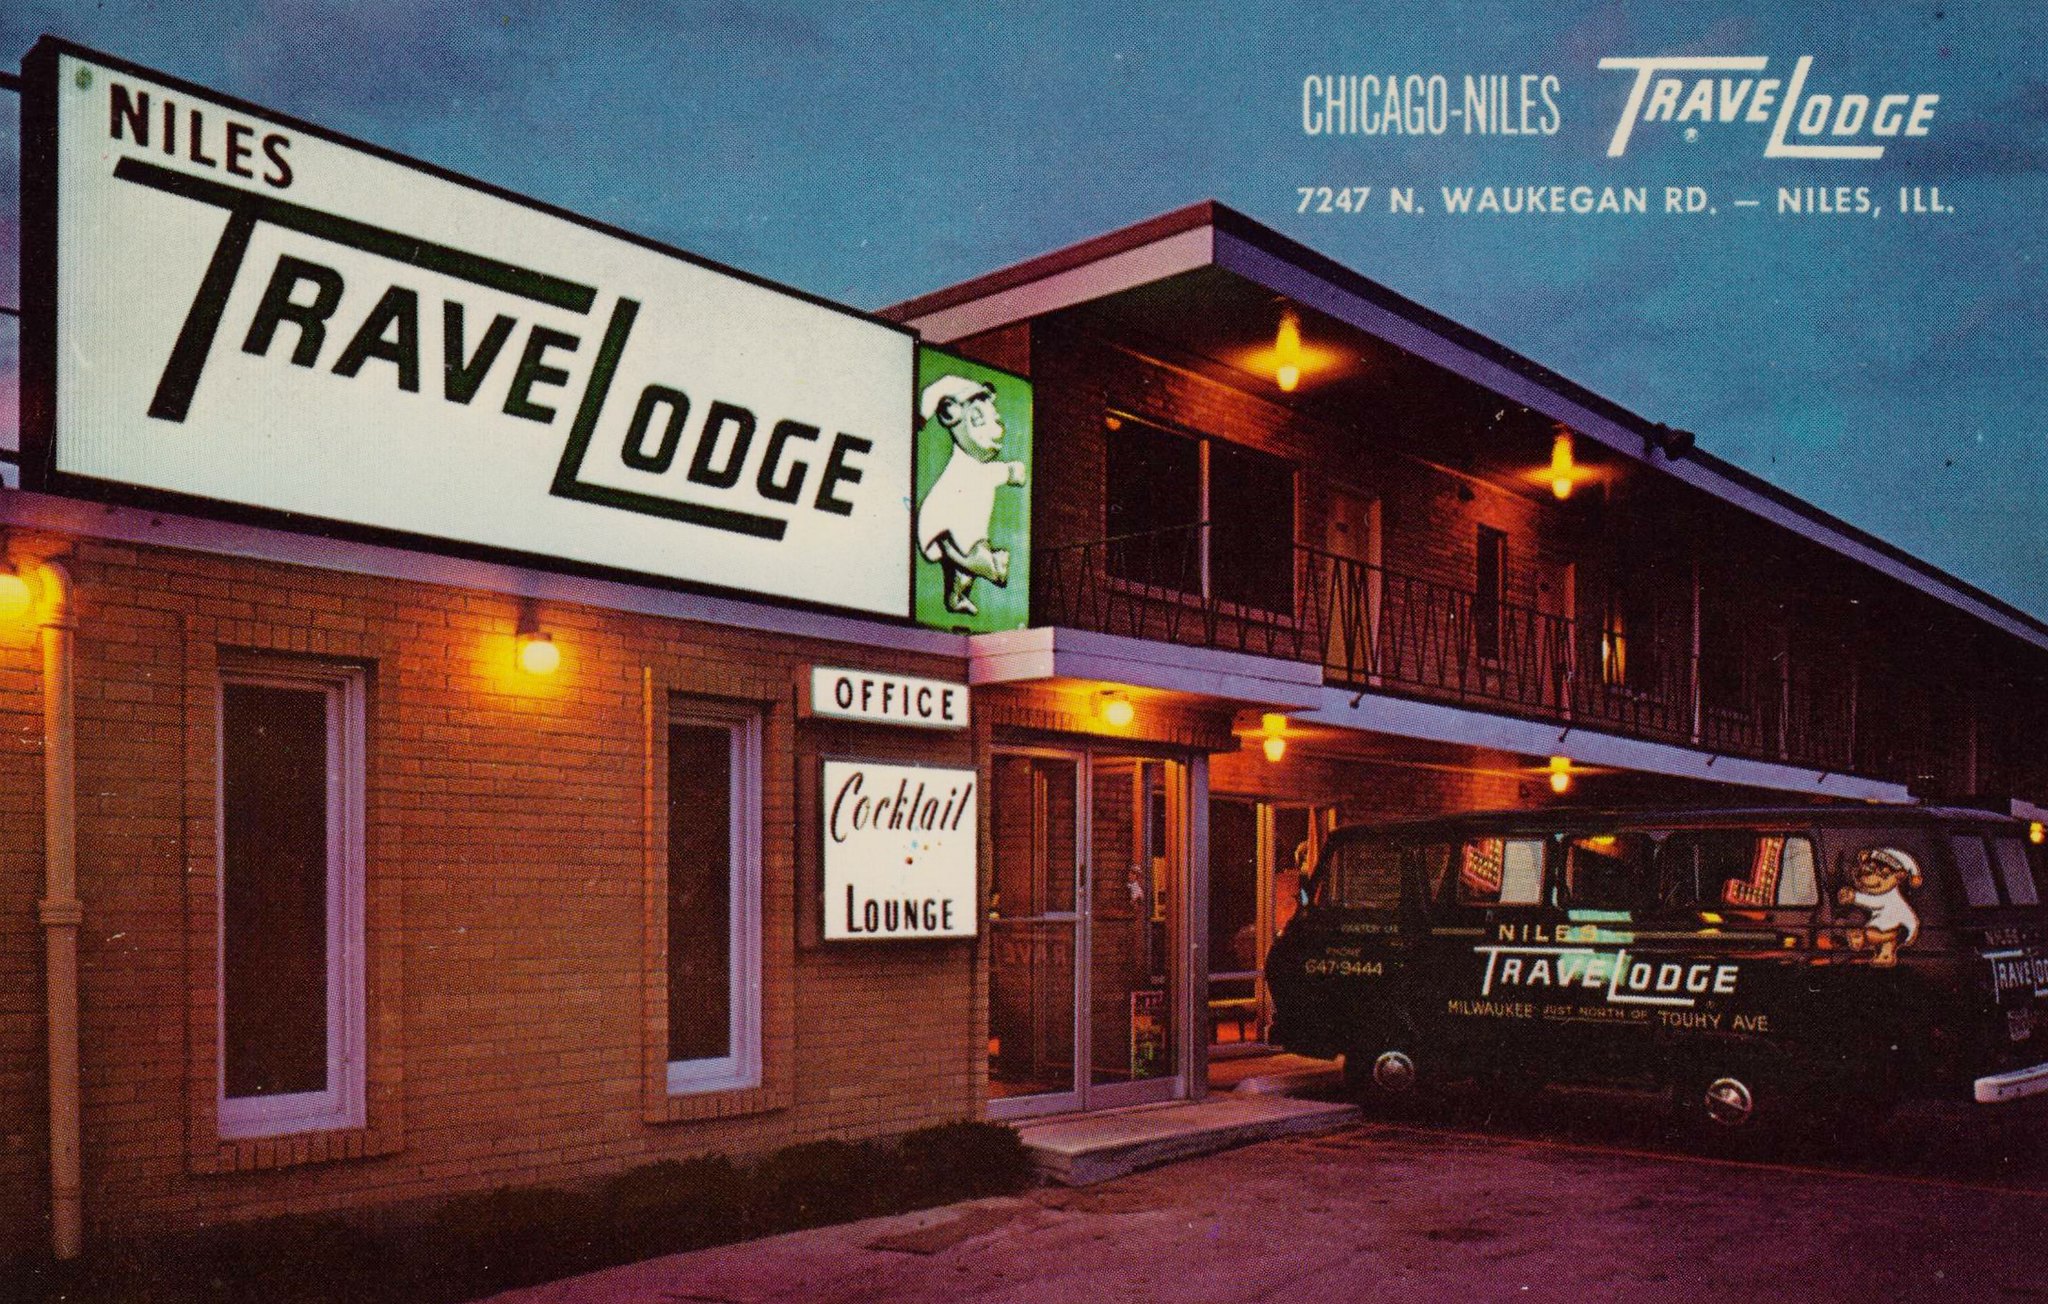 TraveLodge - 7247 North Waukegan Road, Niles, Illinois U.S.A. - 1960's